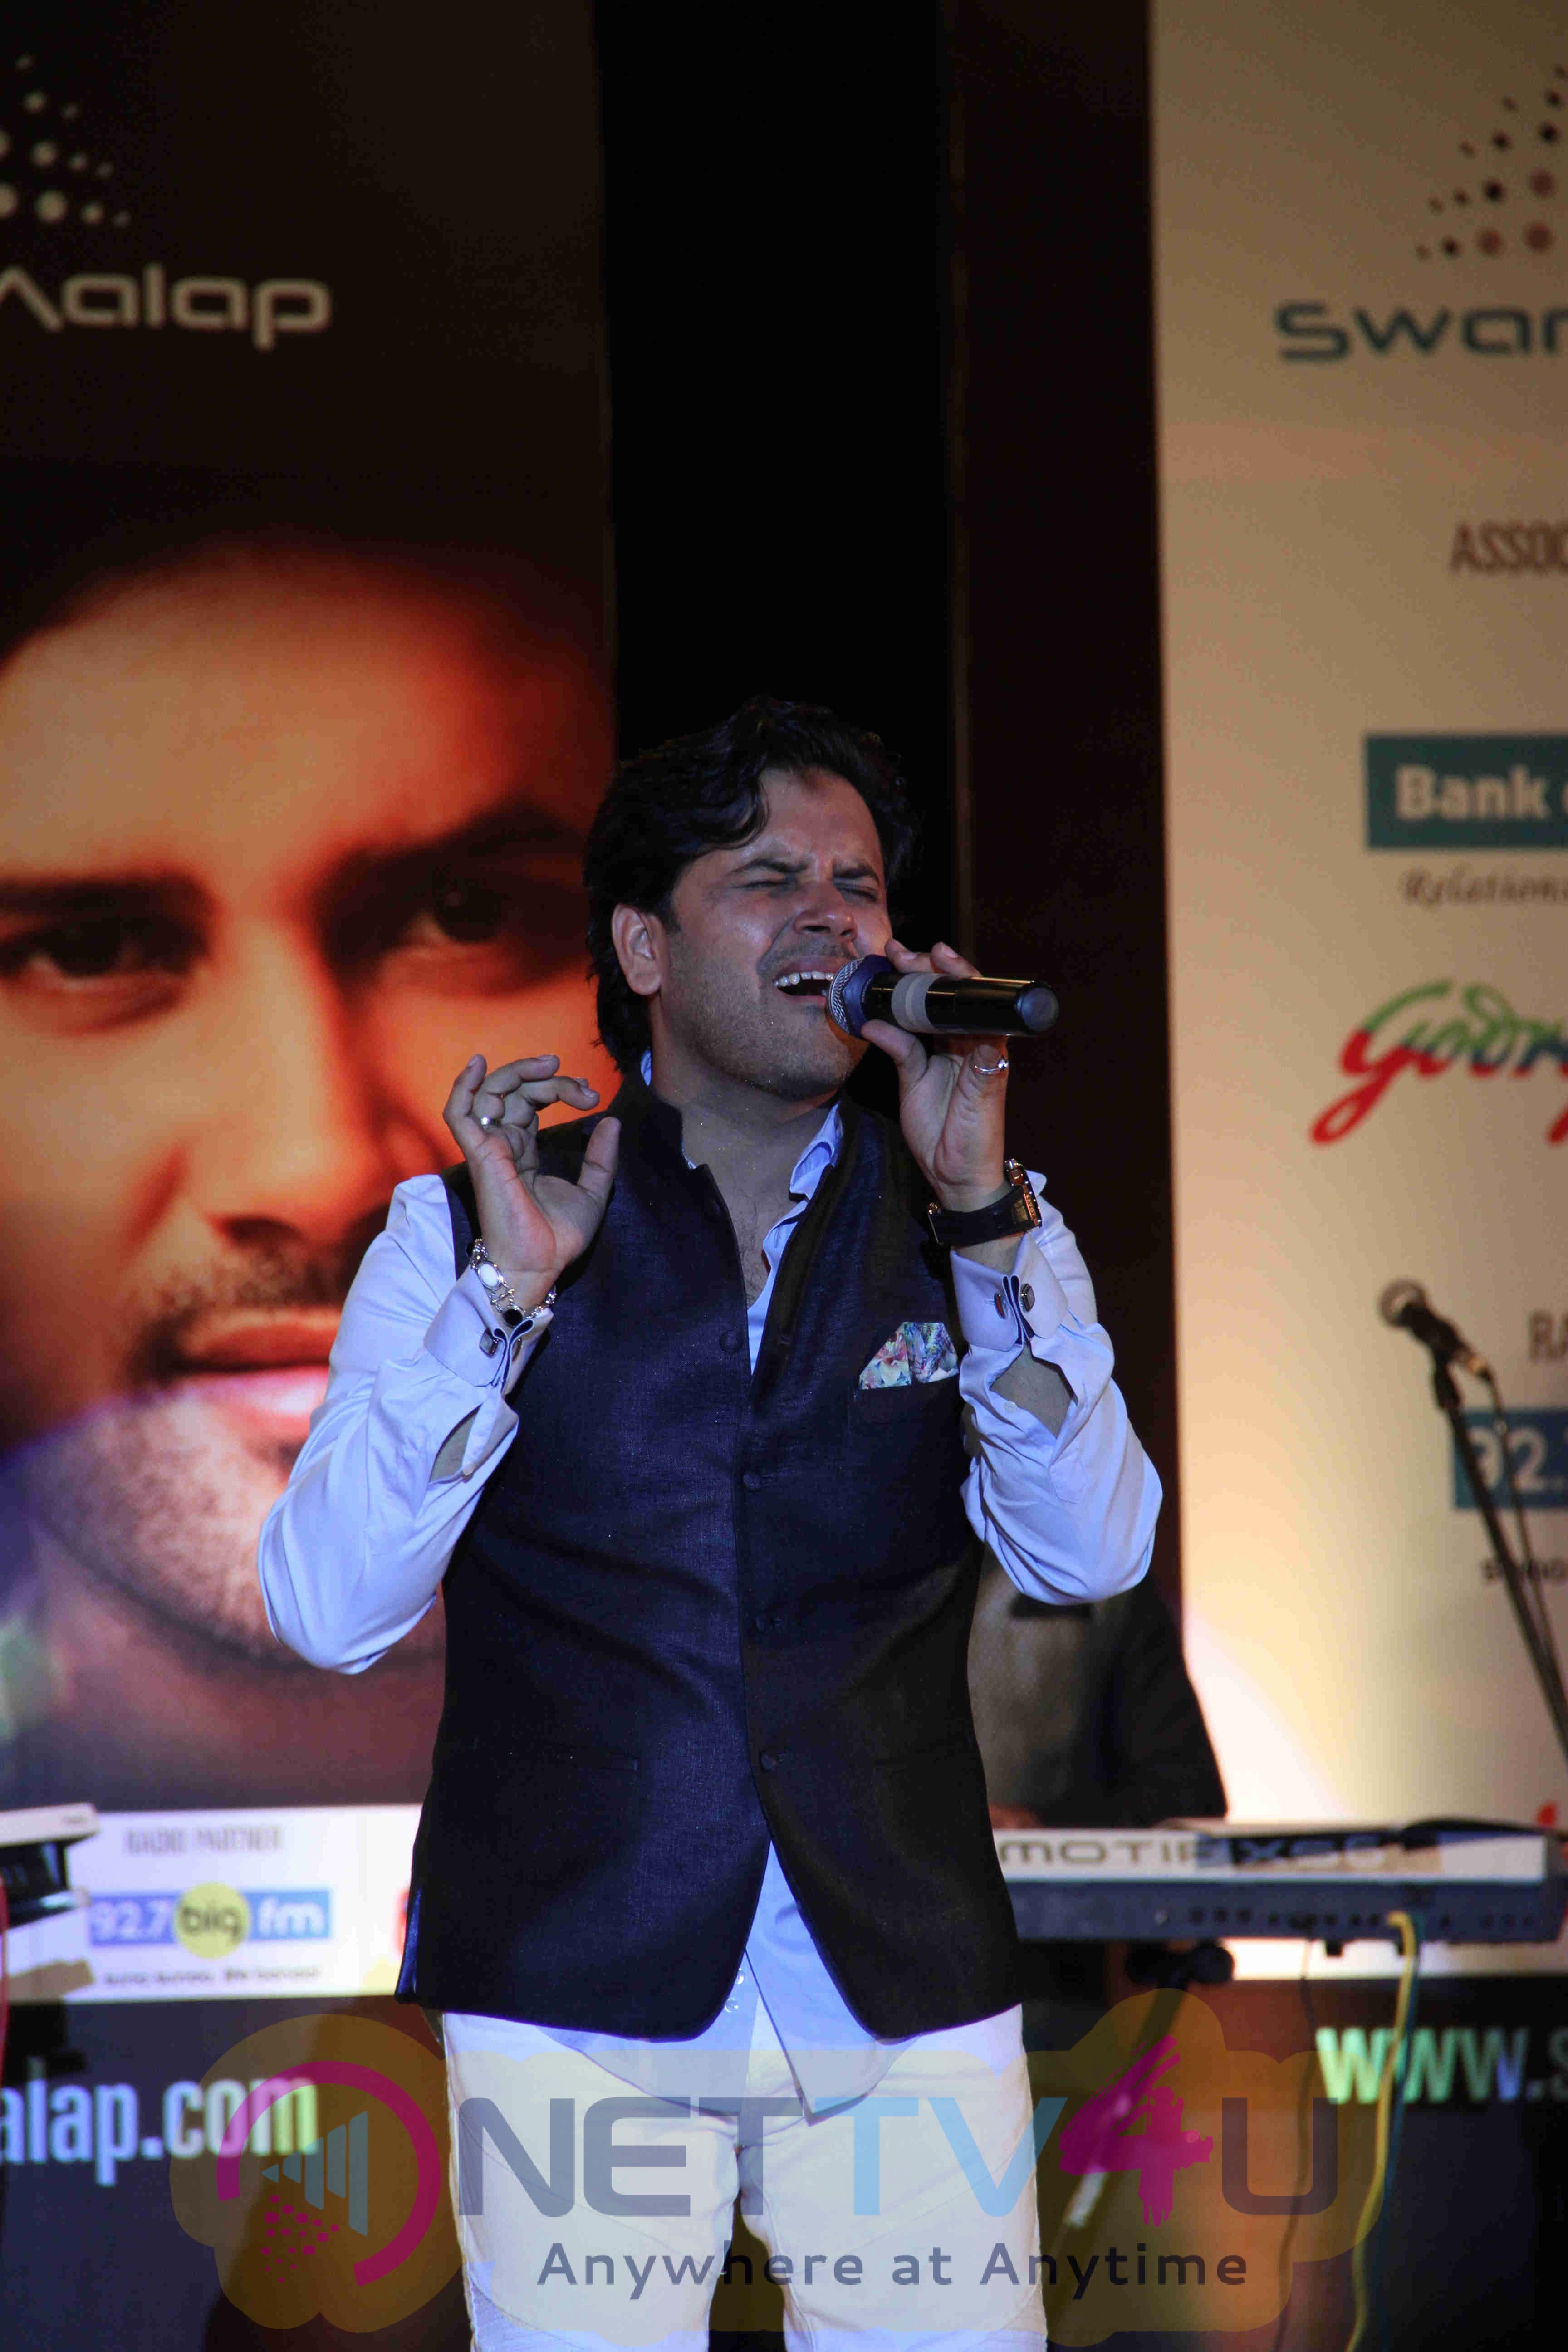 The Versatile, Javed Ali Live In Concert Stills Hindi Gallery